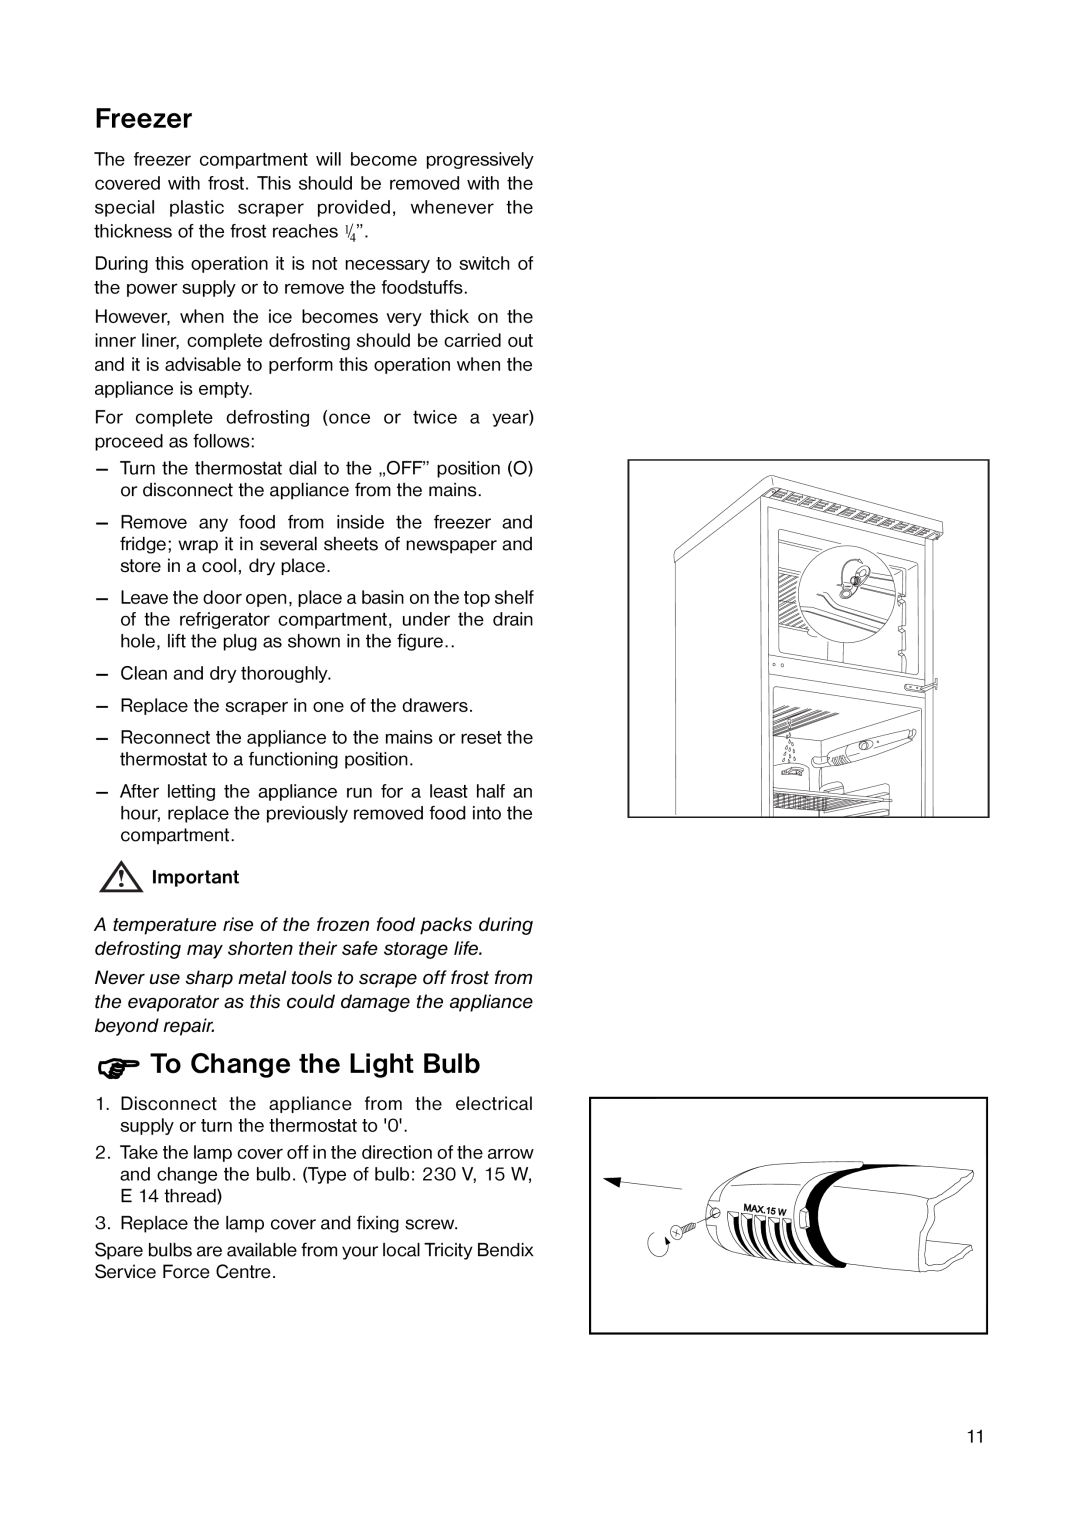 Tricity Bendix TB 100 FF installation instructions Freezer, Φ To Change the Light Bulb 